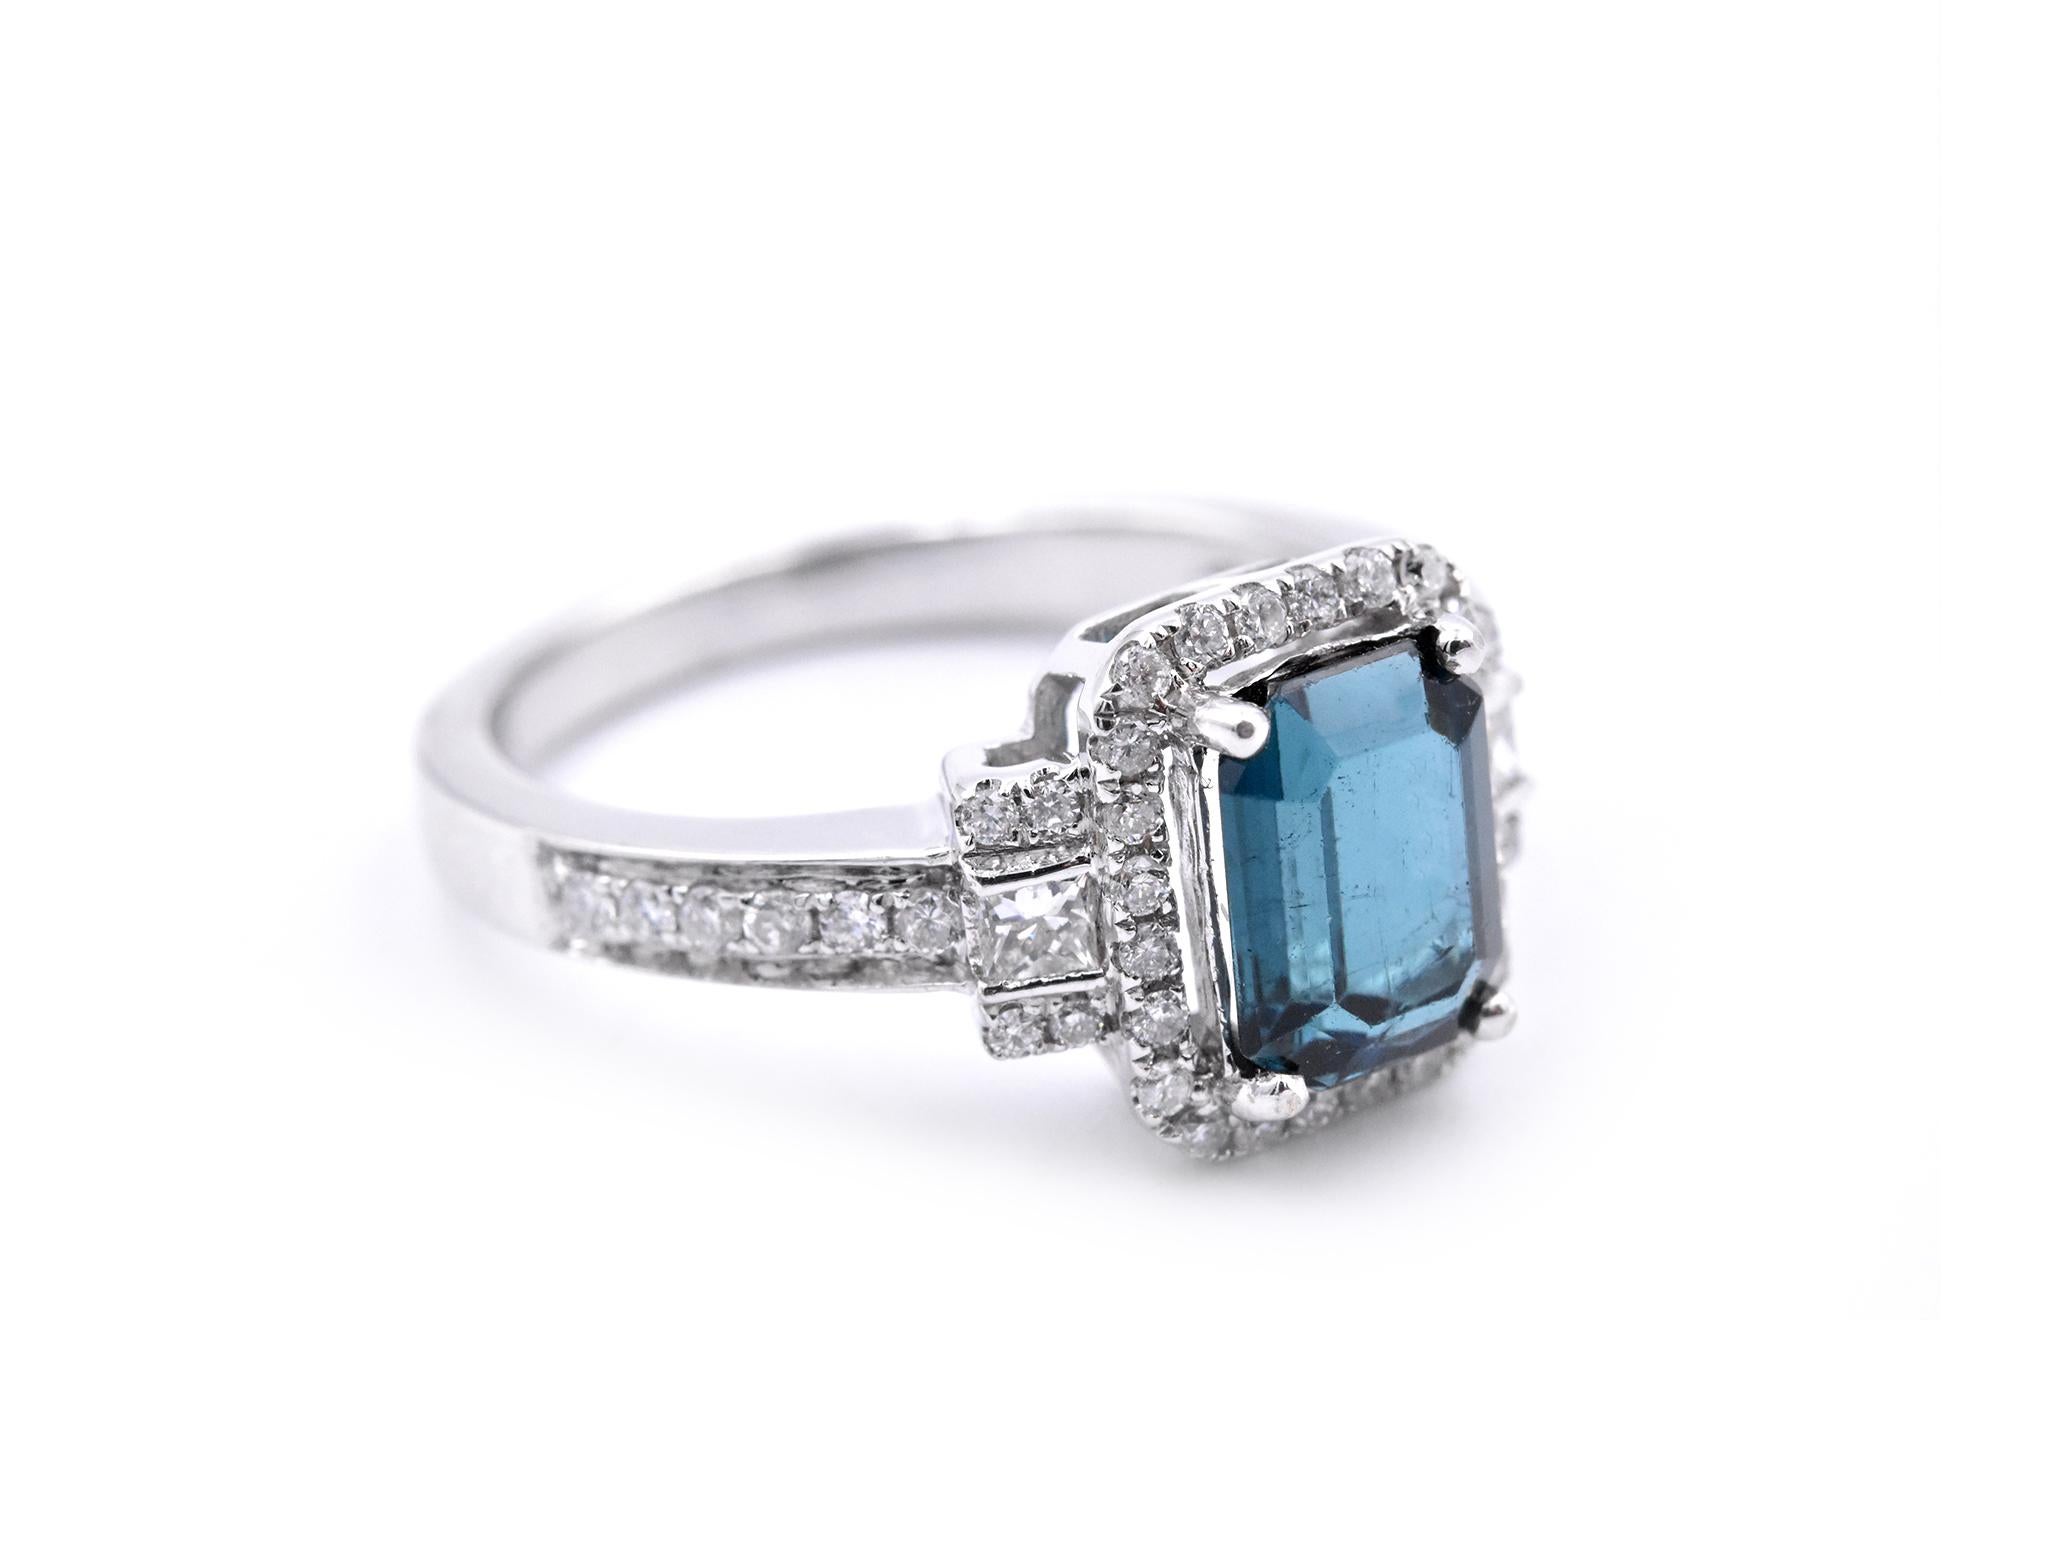 Designer: custom design
Material: 14k white gold
Gemstones: Green Blue Tourmaline = 1.52ct Emerald Cut 
Certification: AGI 25347
Diamonds: 48 round brilliant cuts = .53cttw
Color: F
Clarity: VS2-SI
Ring Size: 7.5 (please allow two additional